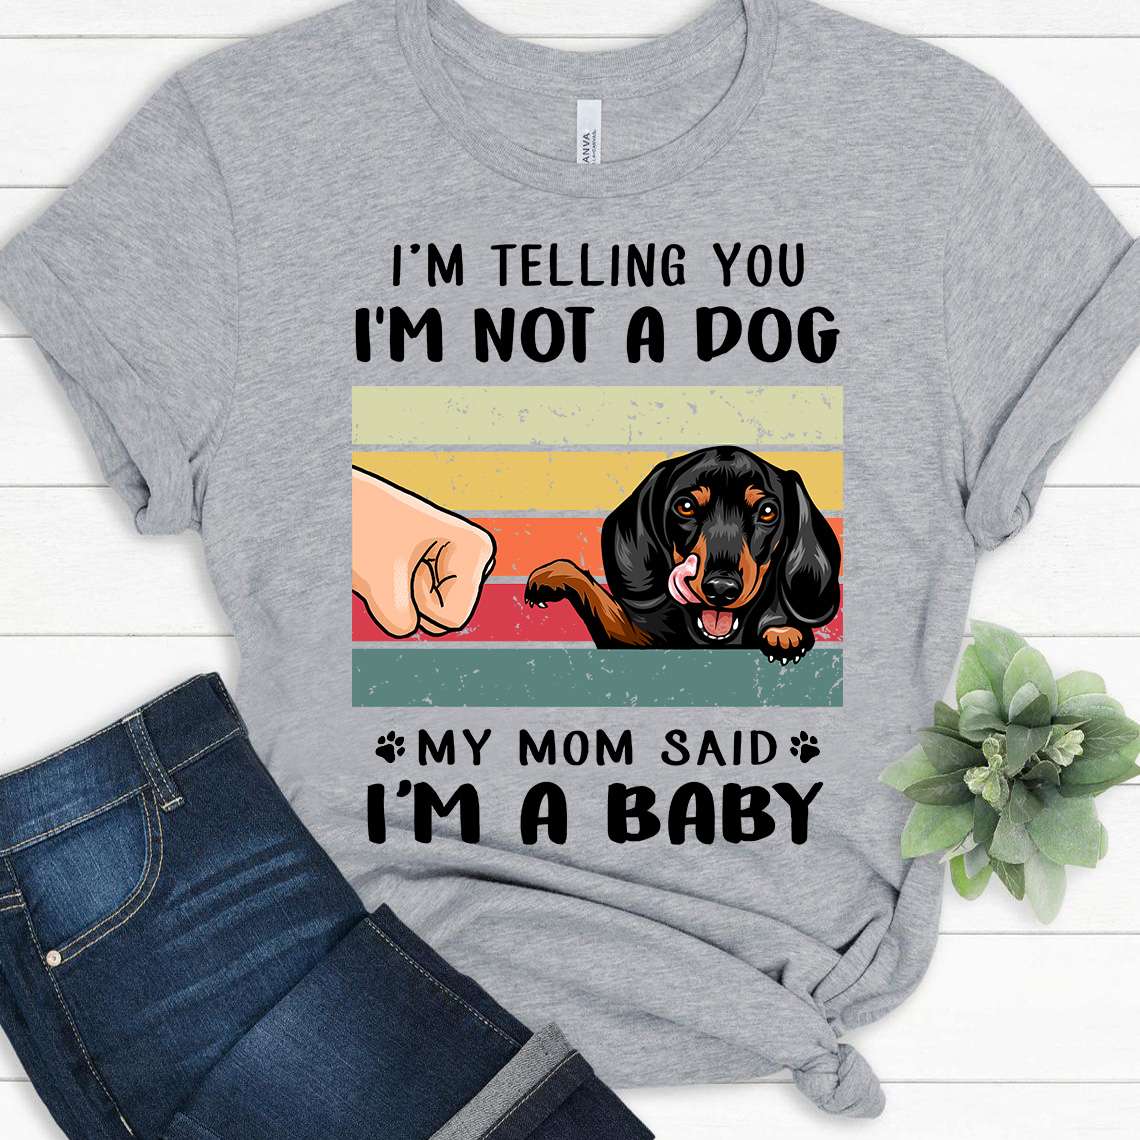 I'm telling you I'm not a dog my mom said I'm a baby - Baby dachshund dog